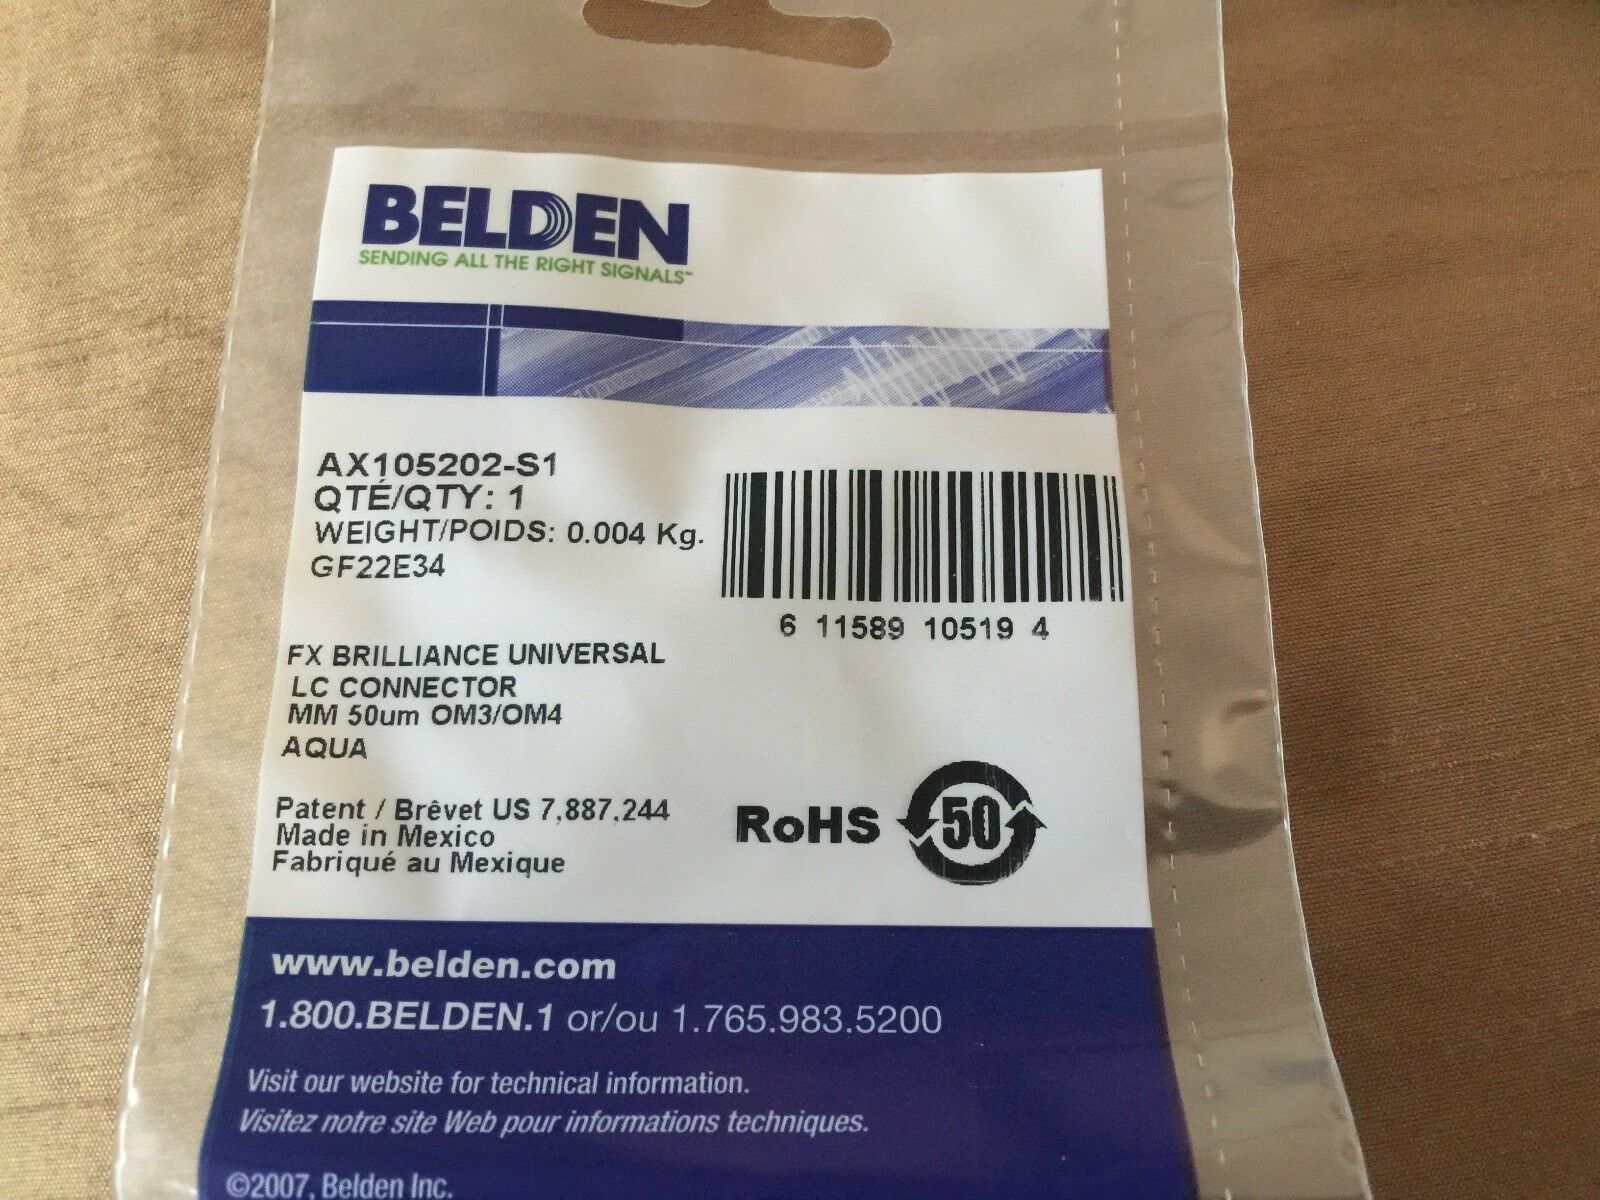 Belden Ax105202-s1 Lc Connector Fx Brilliance Universal Multimode Om3/om4 50 µm